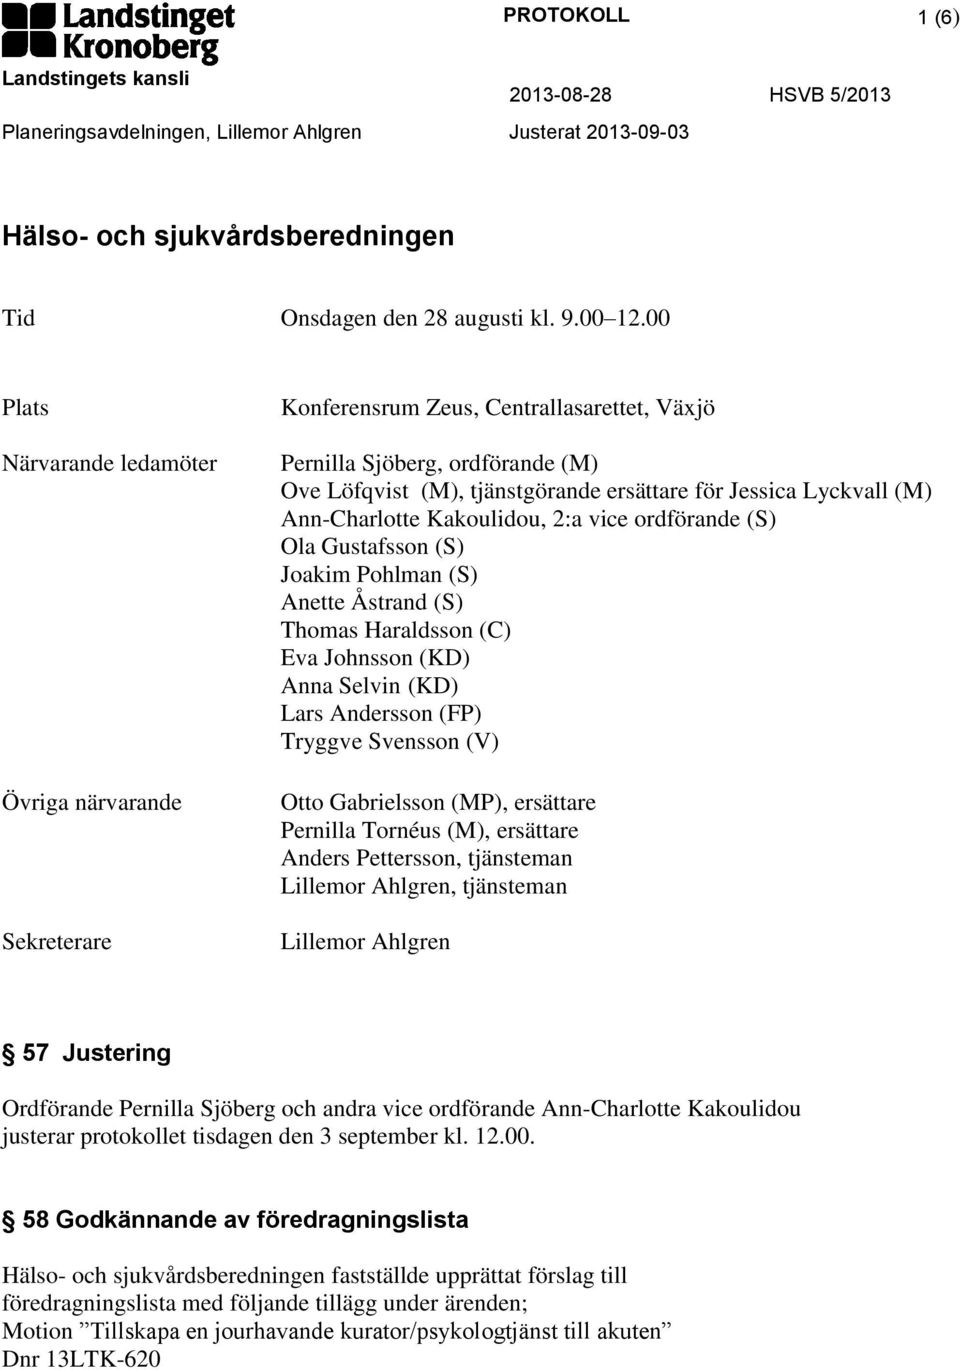 (M) Ann-Charlotte Kakoulidou, 2:a vice ordförande (S) Ola Gustafsson (S) Joakim Pohlman (S) Anette Åstrand (S) Thomas Haraldsson (C) Eva Johnsson (KD) Anna Selvin (KD) Lars Andersson (FP) Tryggve